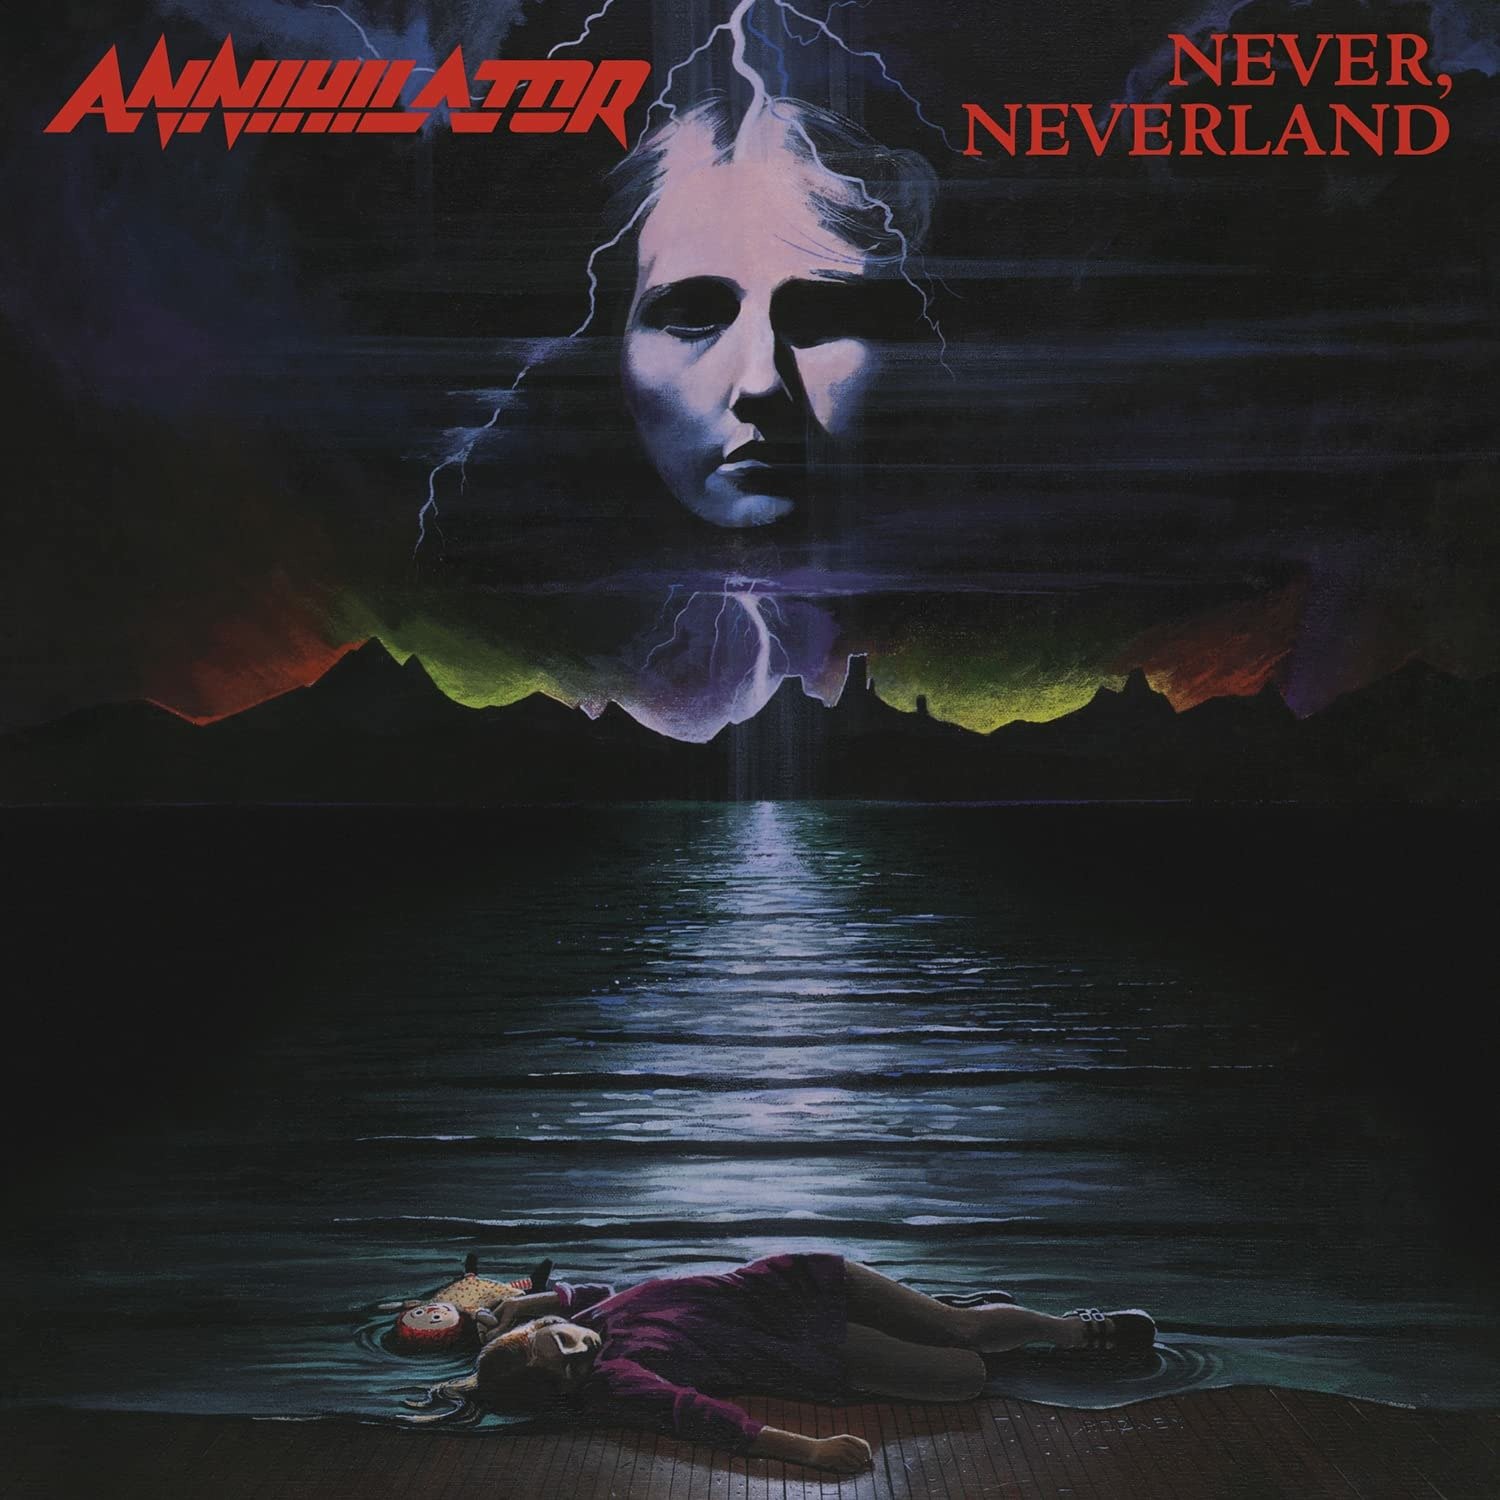 Металл Music On Vinyl Annihilator - Never, Neverland (Black Vinyl LP) gloria gaynor never can say goodbye exp remastered 1 cd